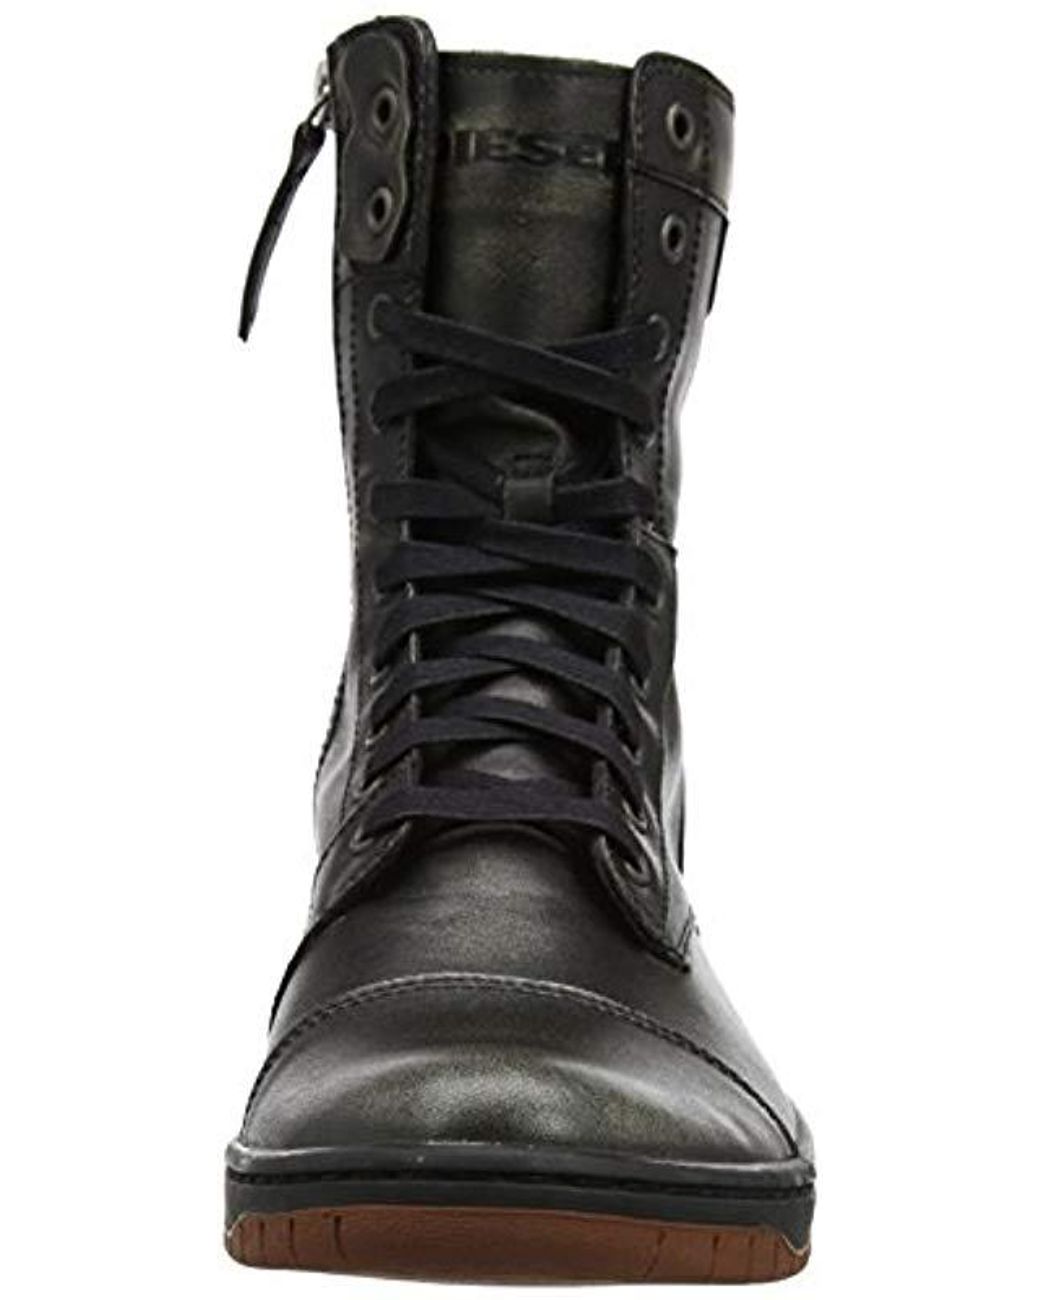 DIESEL Tatradium Basket Butch Zippy Boots in Black for Men | Lyst